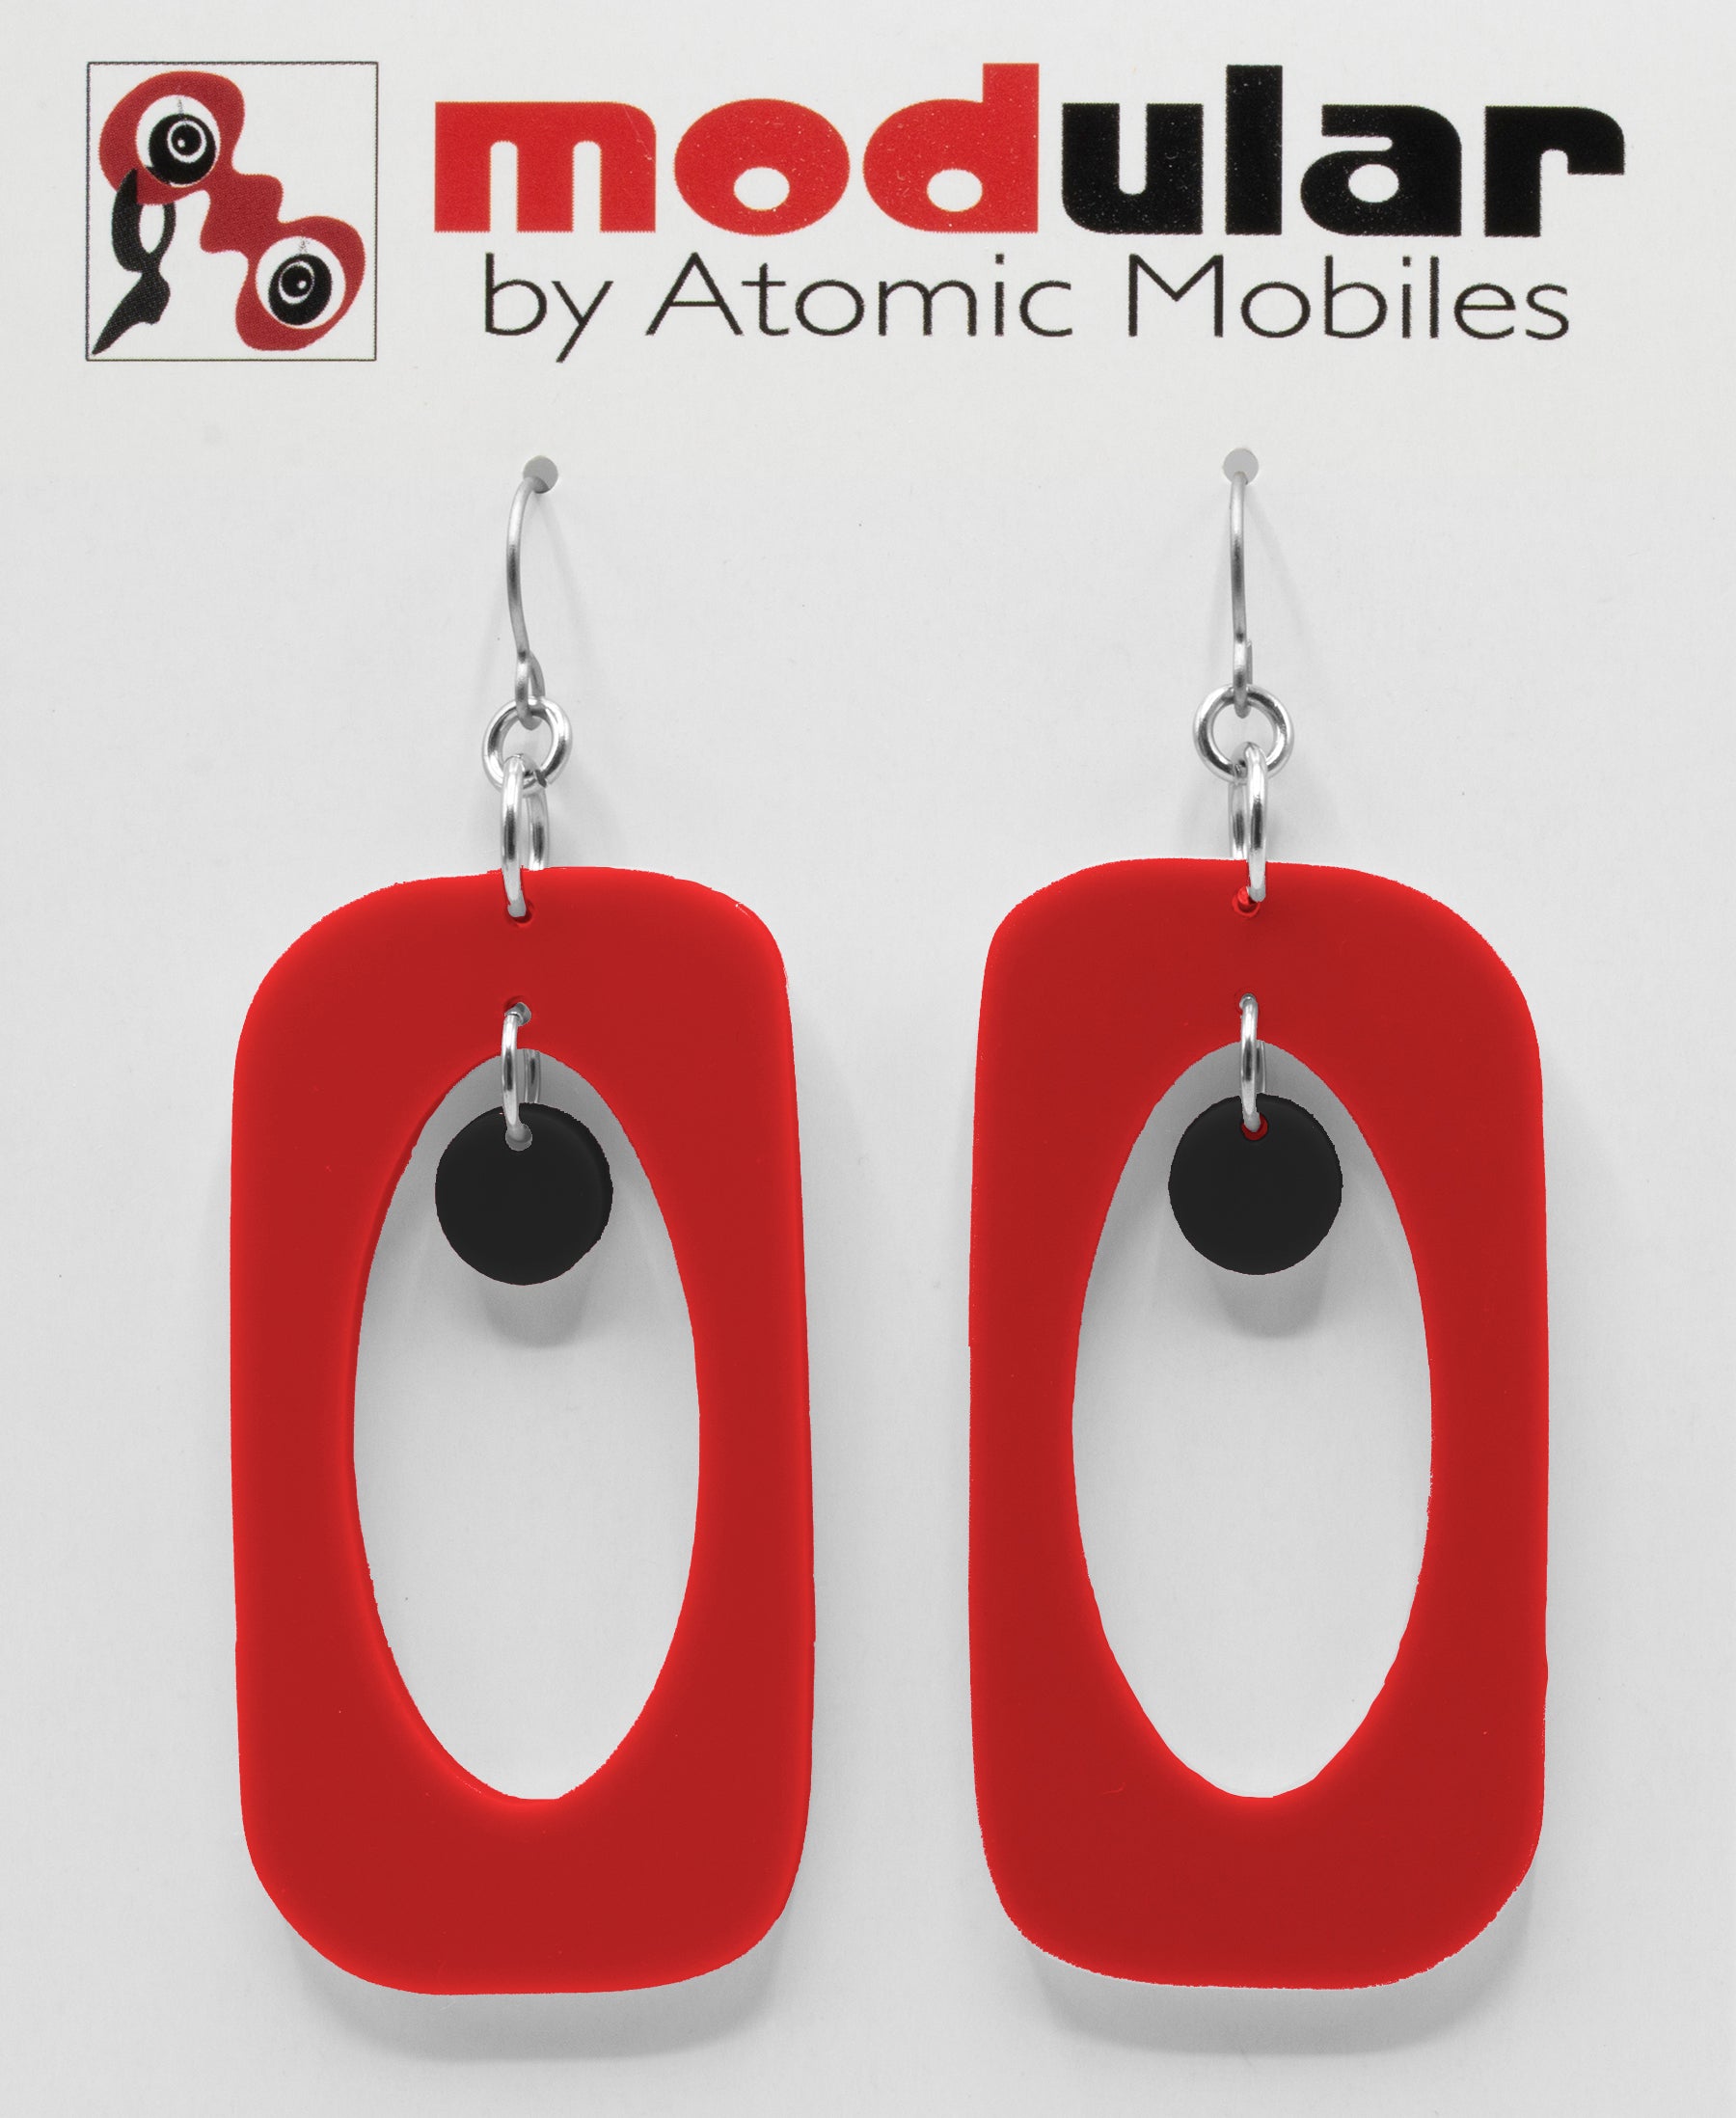 MODular Earrings - Beatnik Boho Statement Earrings in Red and Black by AtomicMobiles.com - retro era inspired mod handmade jewelry